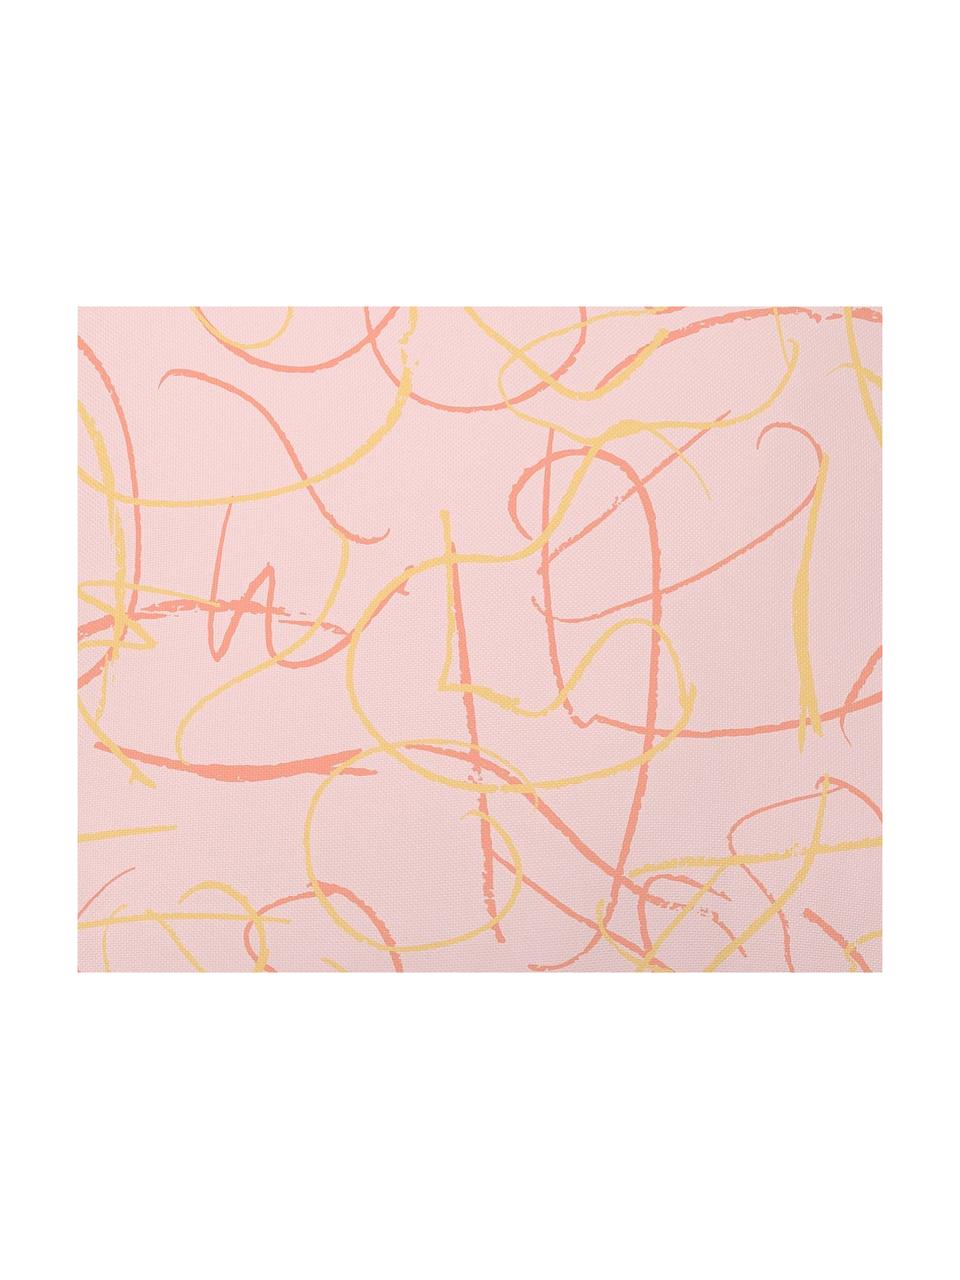 Kissenhülle Doodle mit abstraktem Muster in Rosa/Gelb, 100% Polyester, Rosa, Gelb, 40 x 40 cm